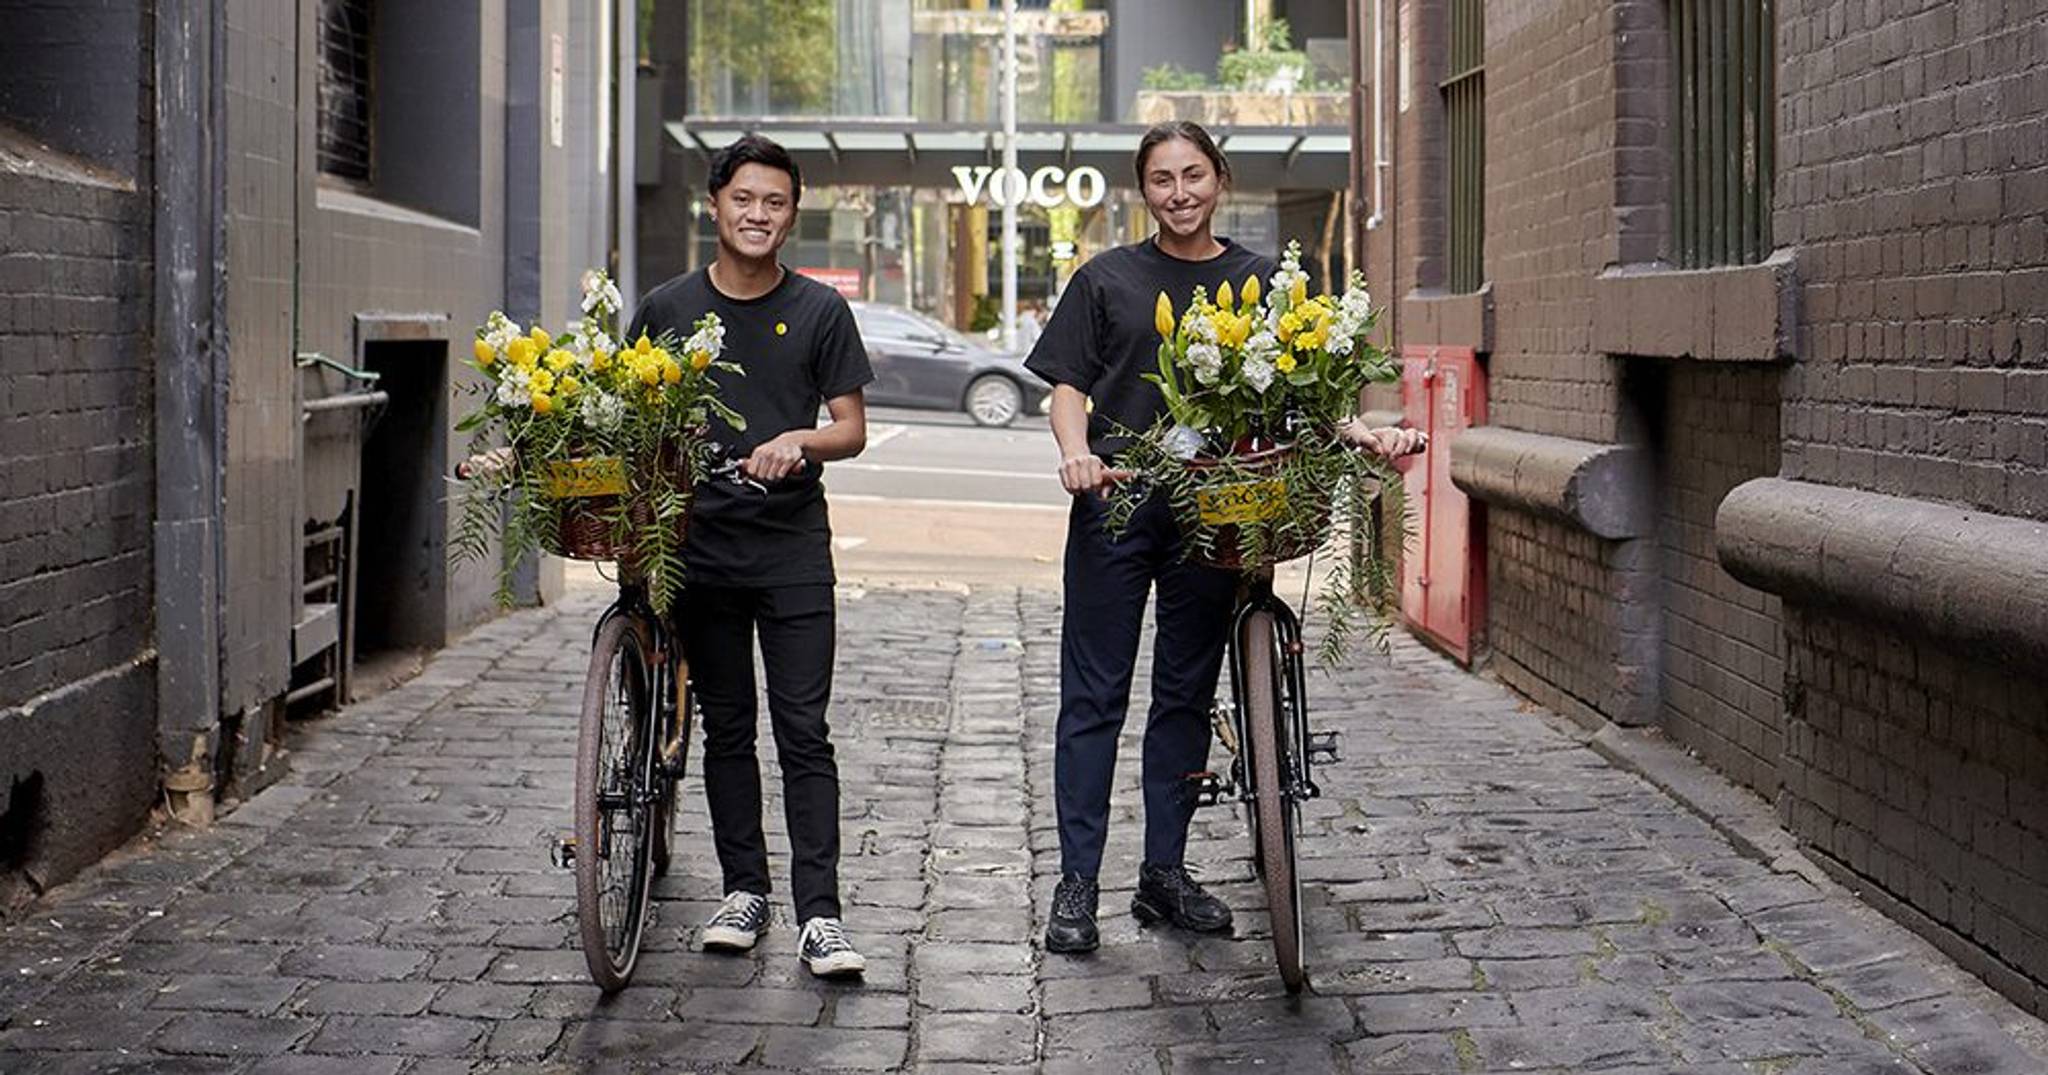 Voco's bamboo bikes promote eco-conscious travel